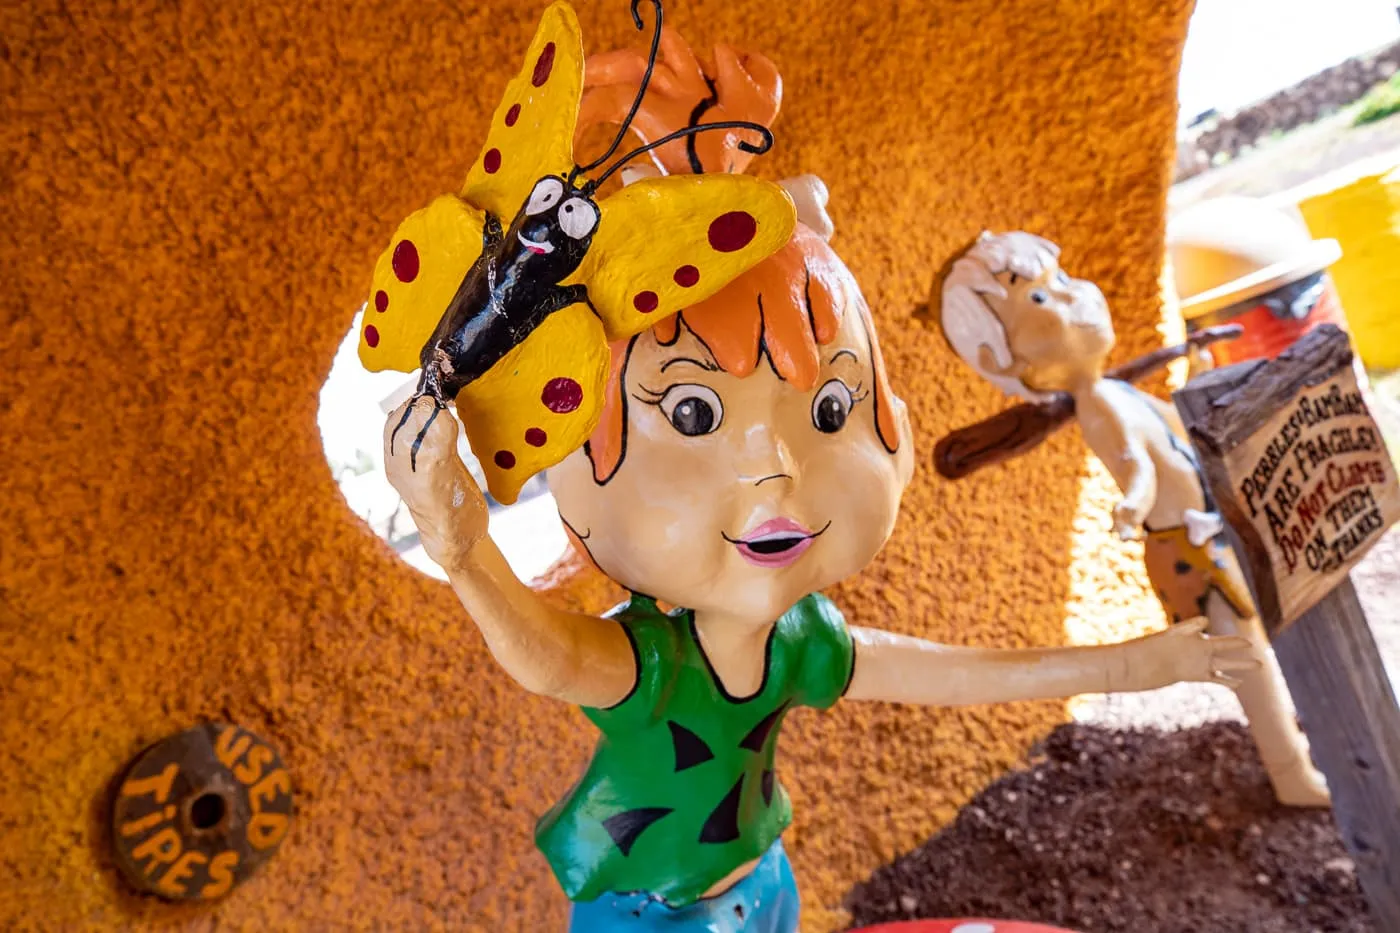 Pebbles Statue at Flintstones Bedrock City in Williams, Arizona - Arizona Roadside Attraction